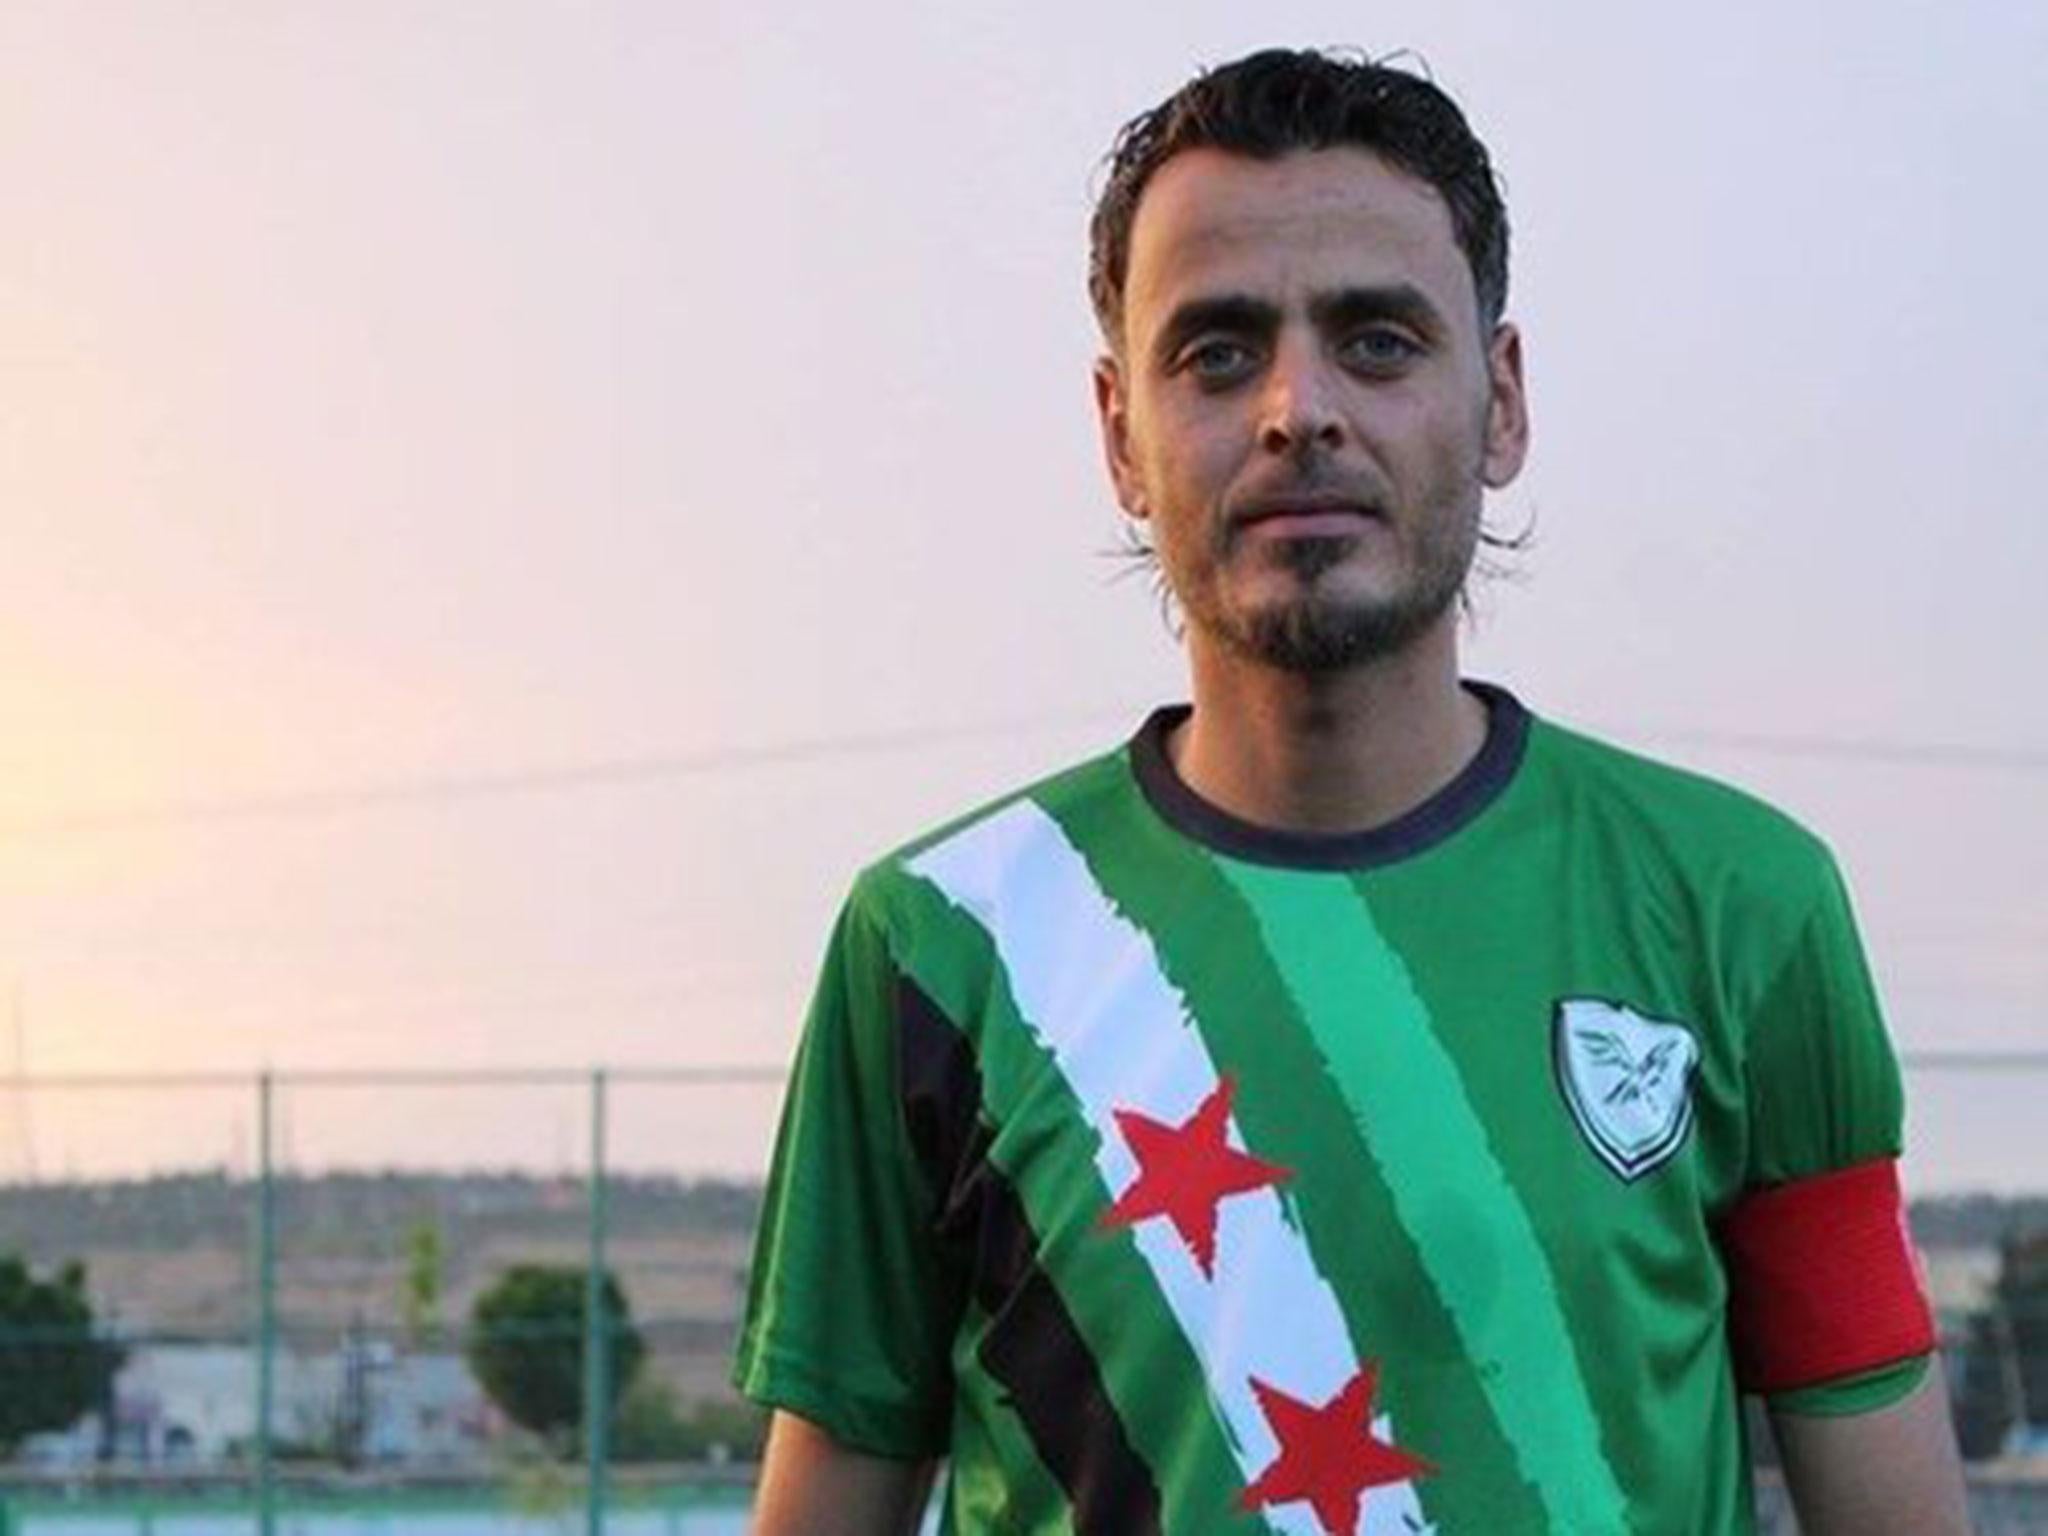 syria national football team jersey